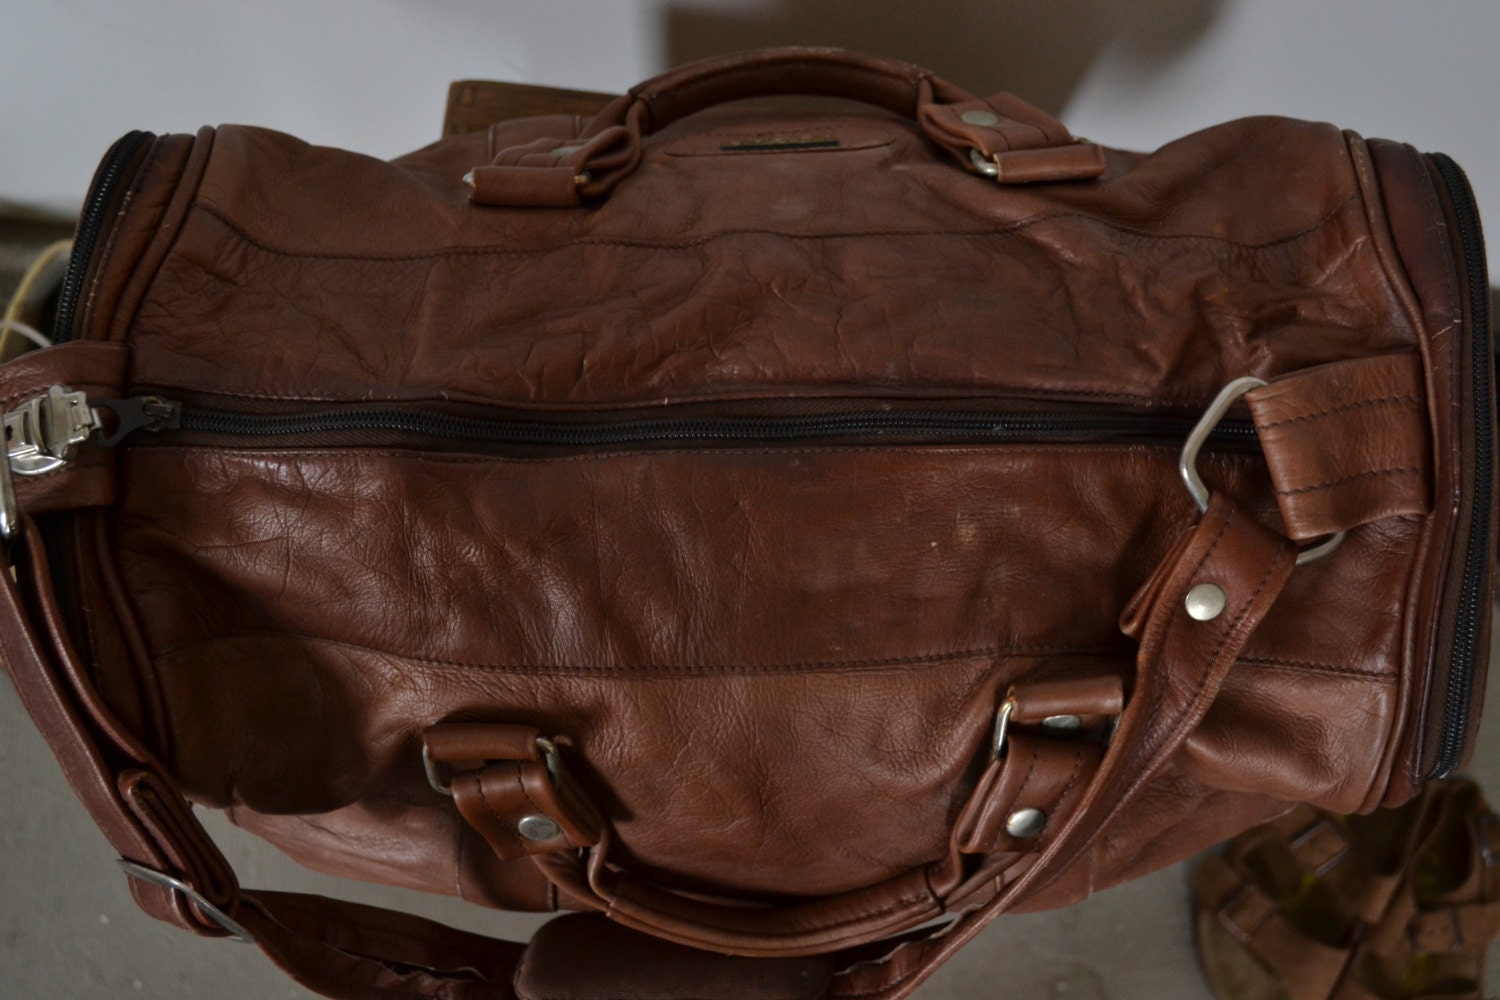 SALE Vintage Leather Duffle Travel Bag by Jugar